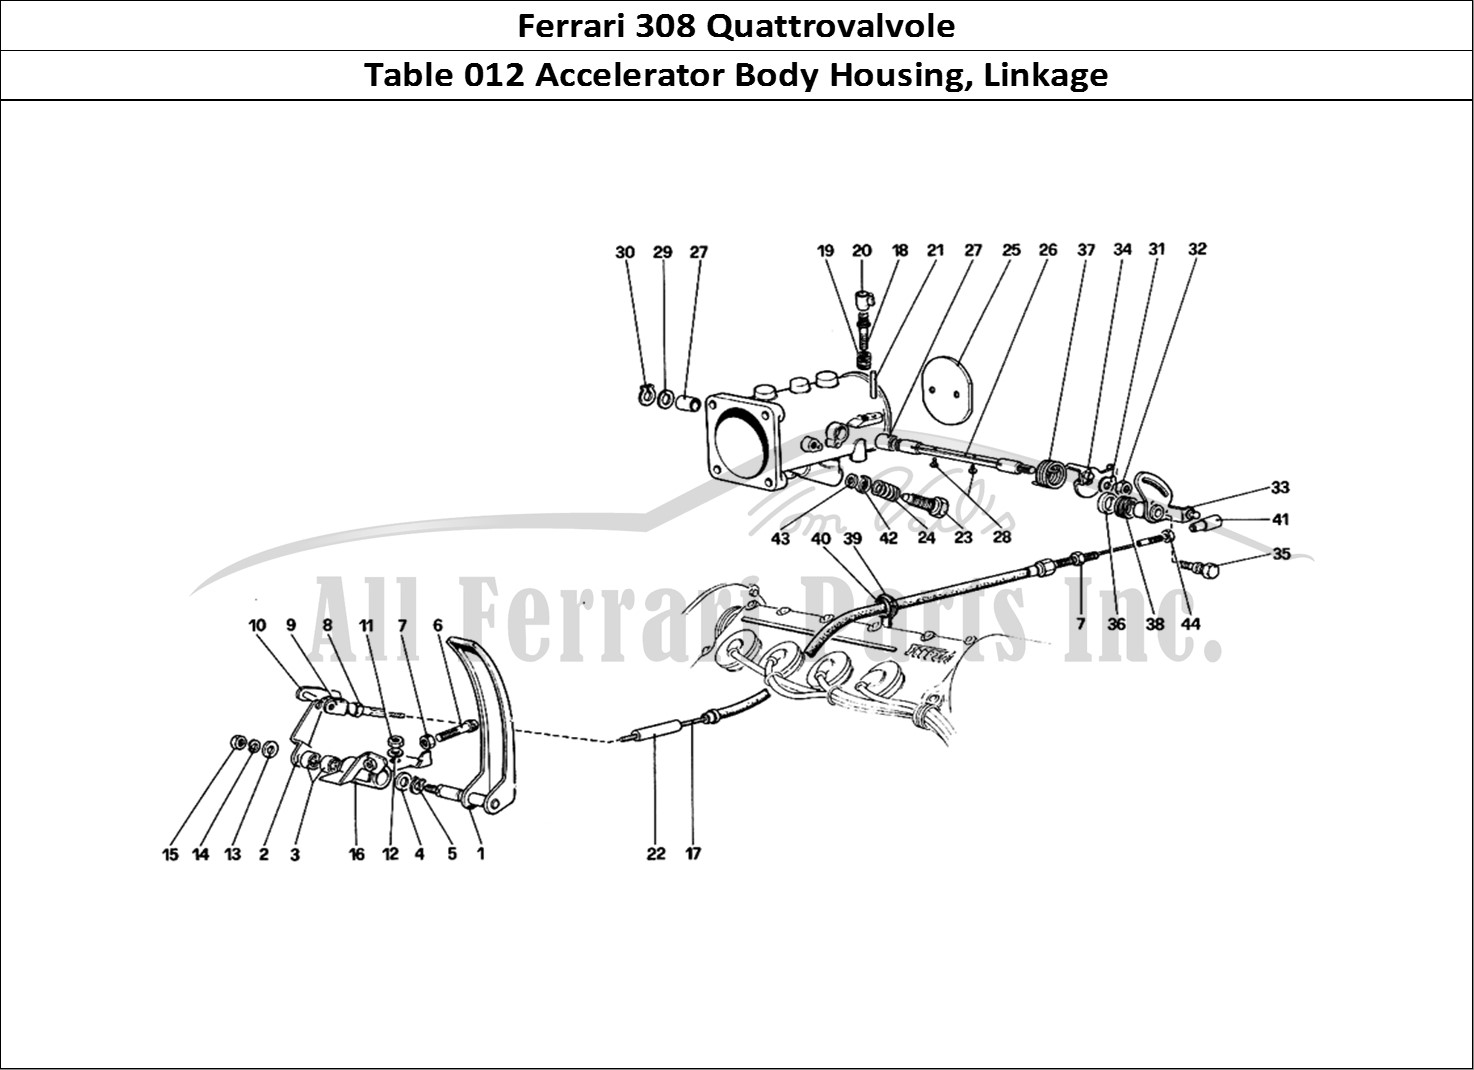 Ferrari Parts Ferrari 308 Quattrovalvole (1985) Page 012 Throttle Housing and Link